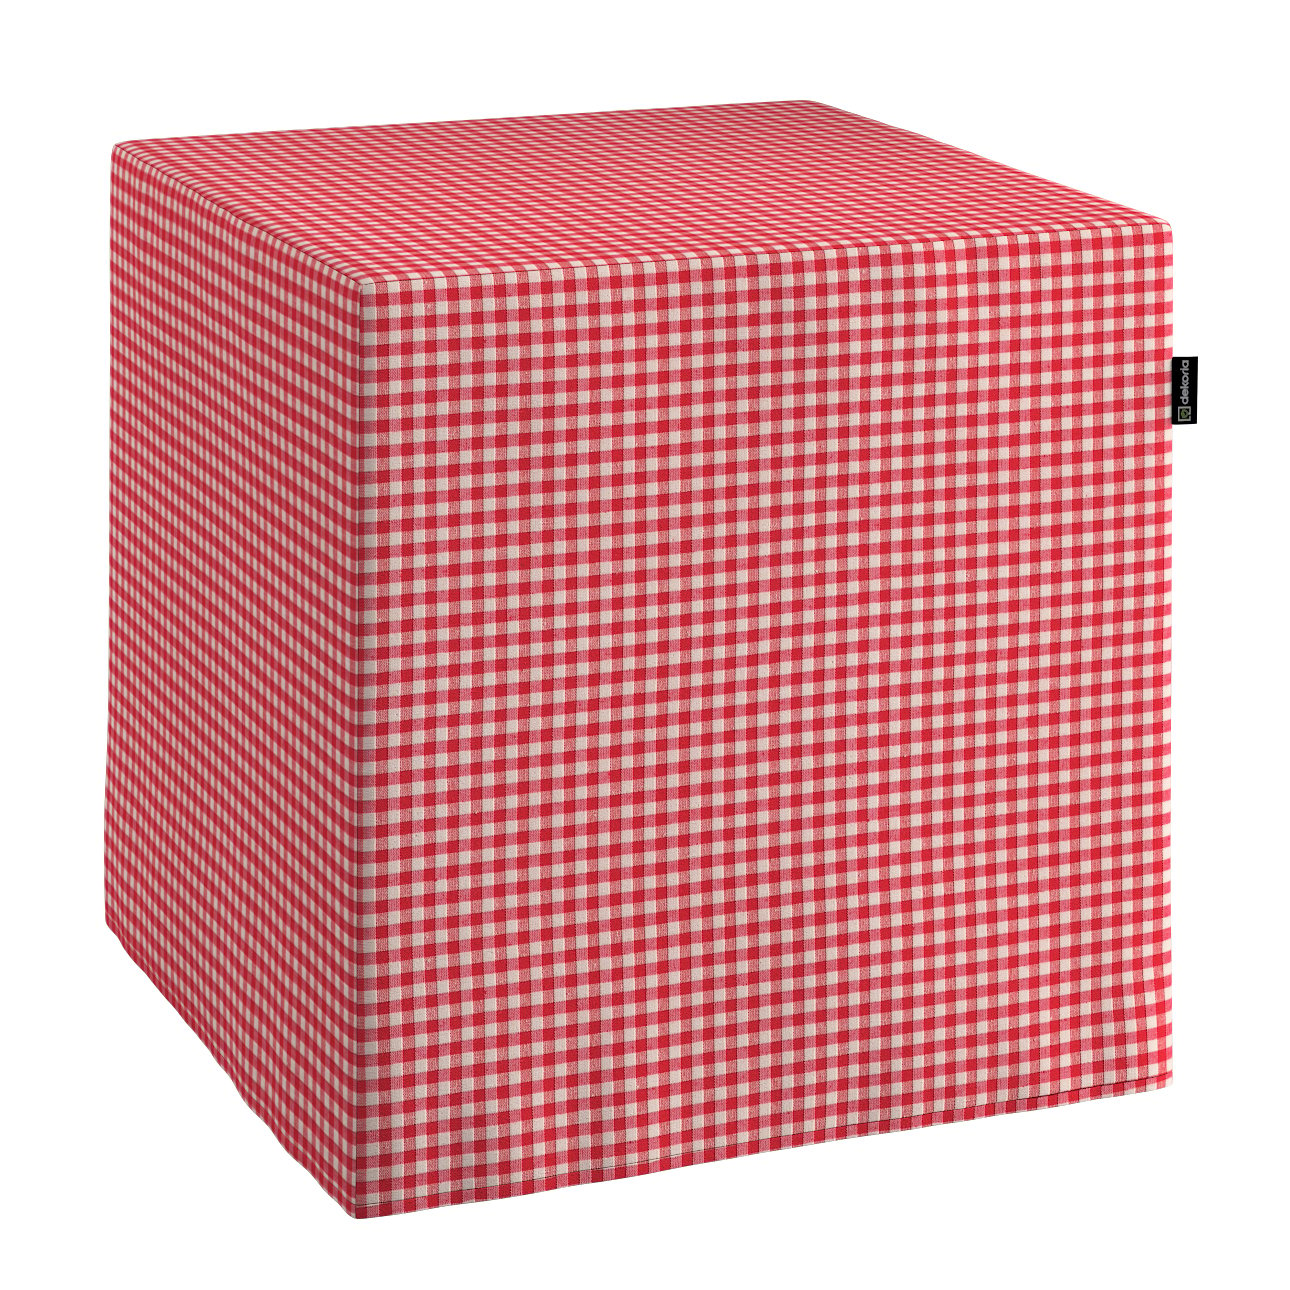 Dekoria Poťah na taburetku,kocka, červeno-biele malé káro, 40 x 40 x 40 cm, Quadro, 136-15